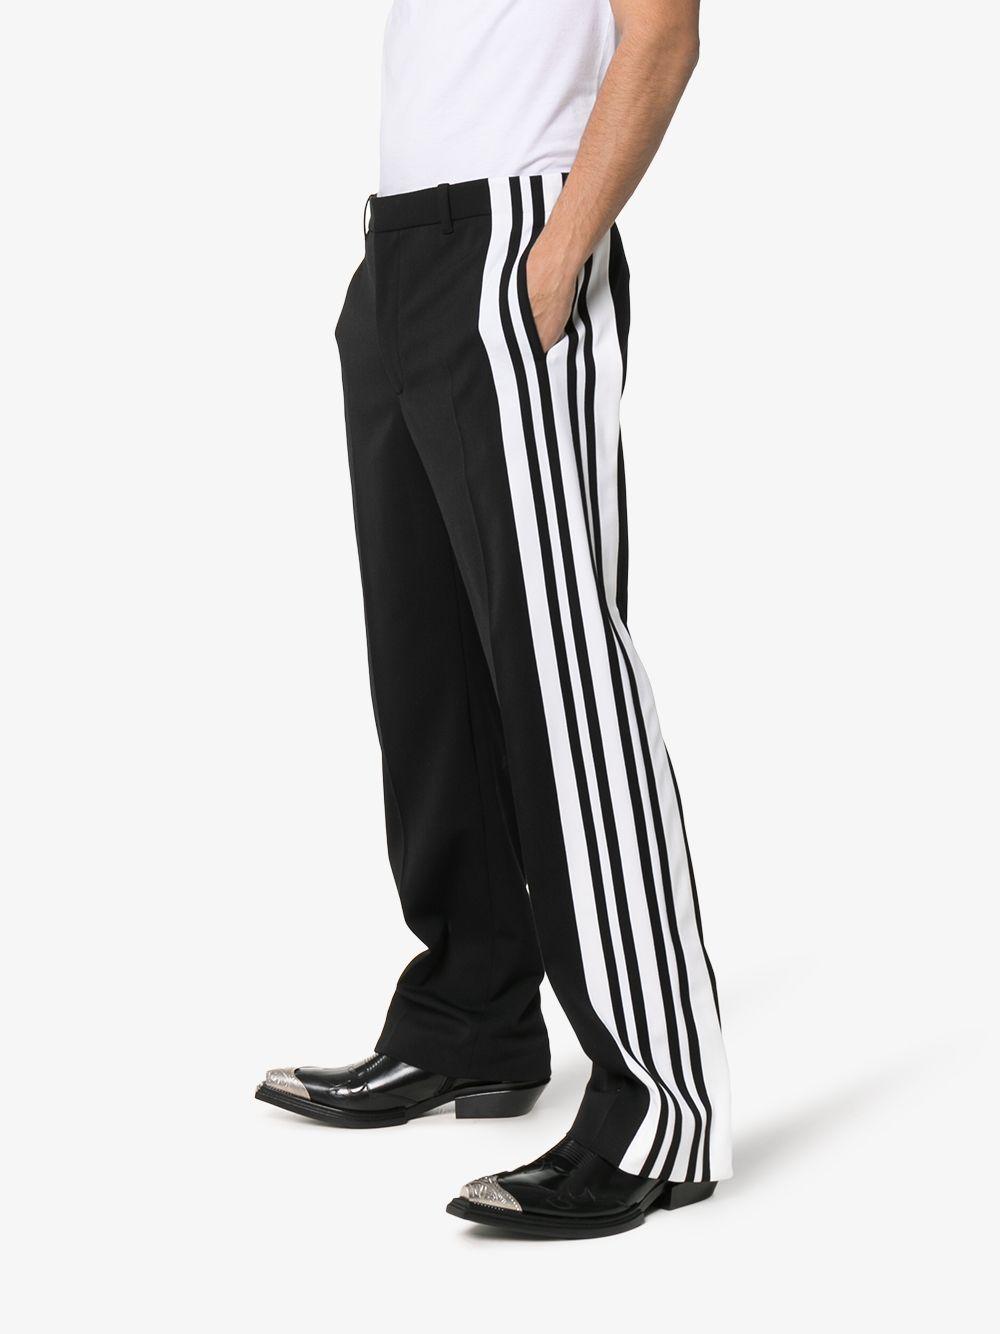 Balenciaga Synthetic Side Stripe Trousers in Black for Men - Lyst